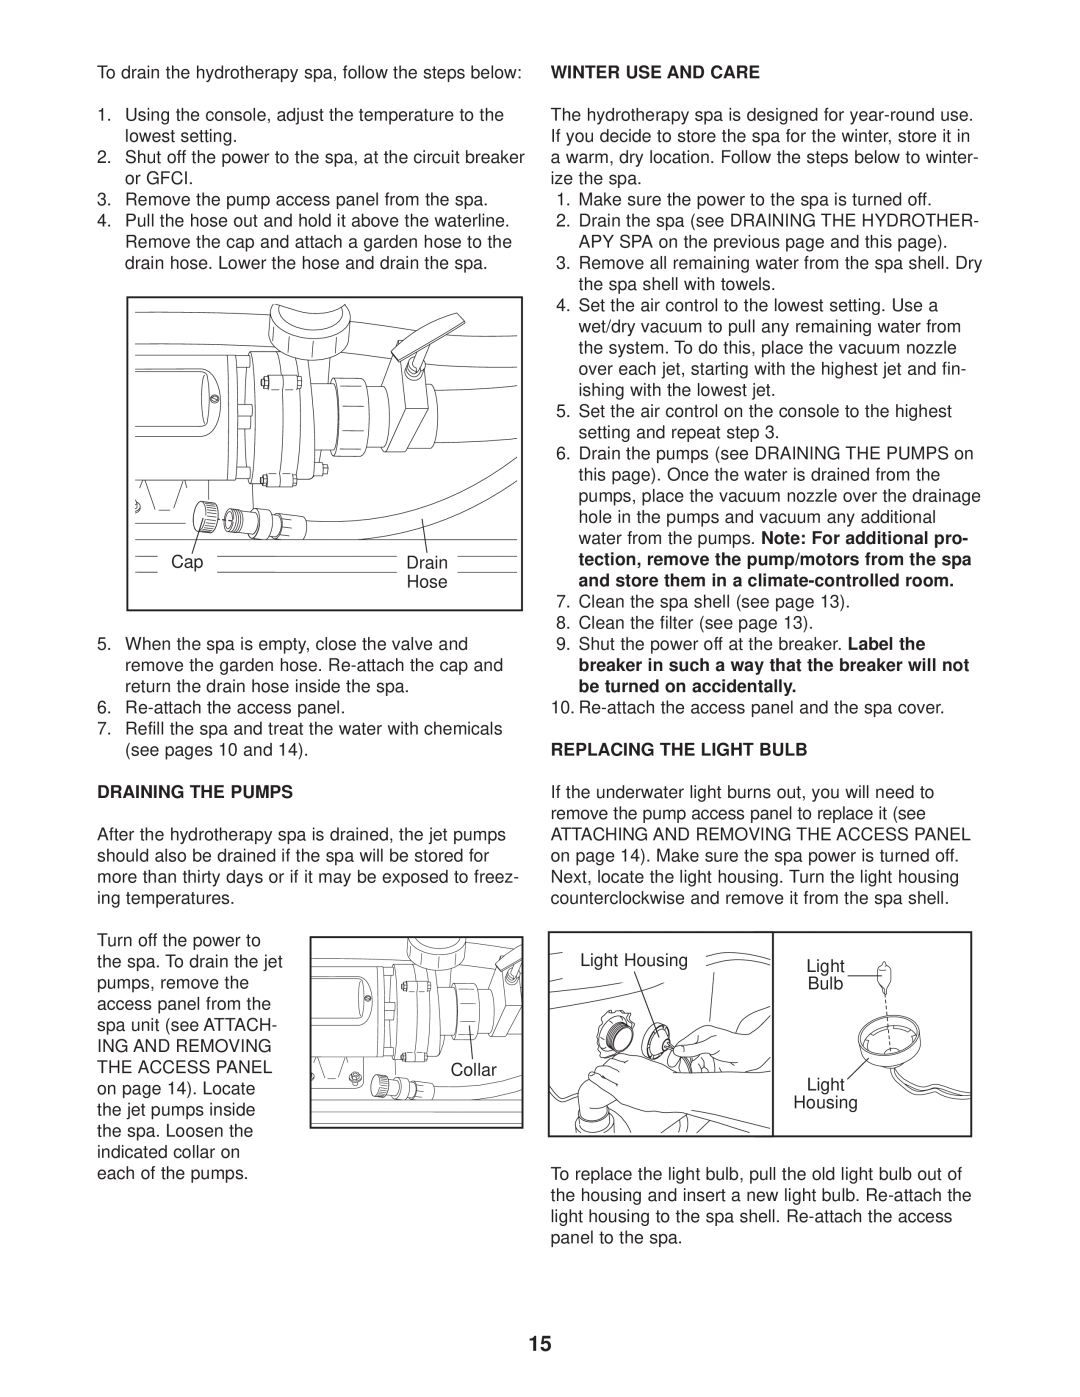 Image IMSB62820, IMSG62820 user manual Draining The Pumps, Replacing The Light Bulb 